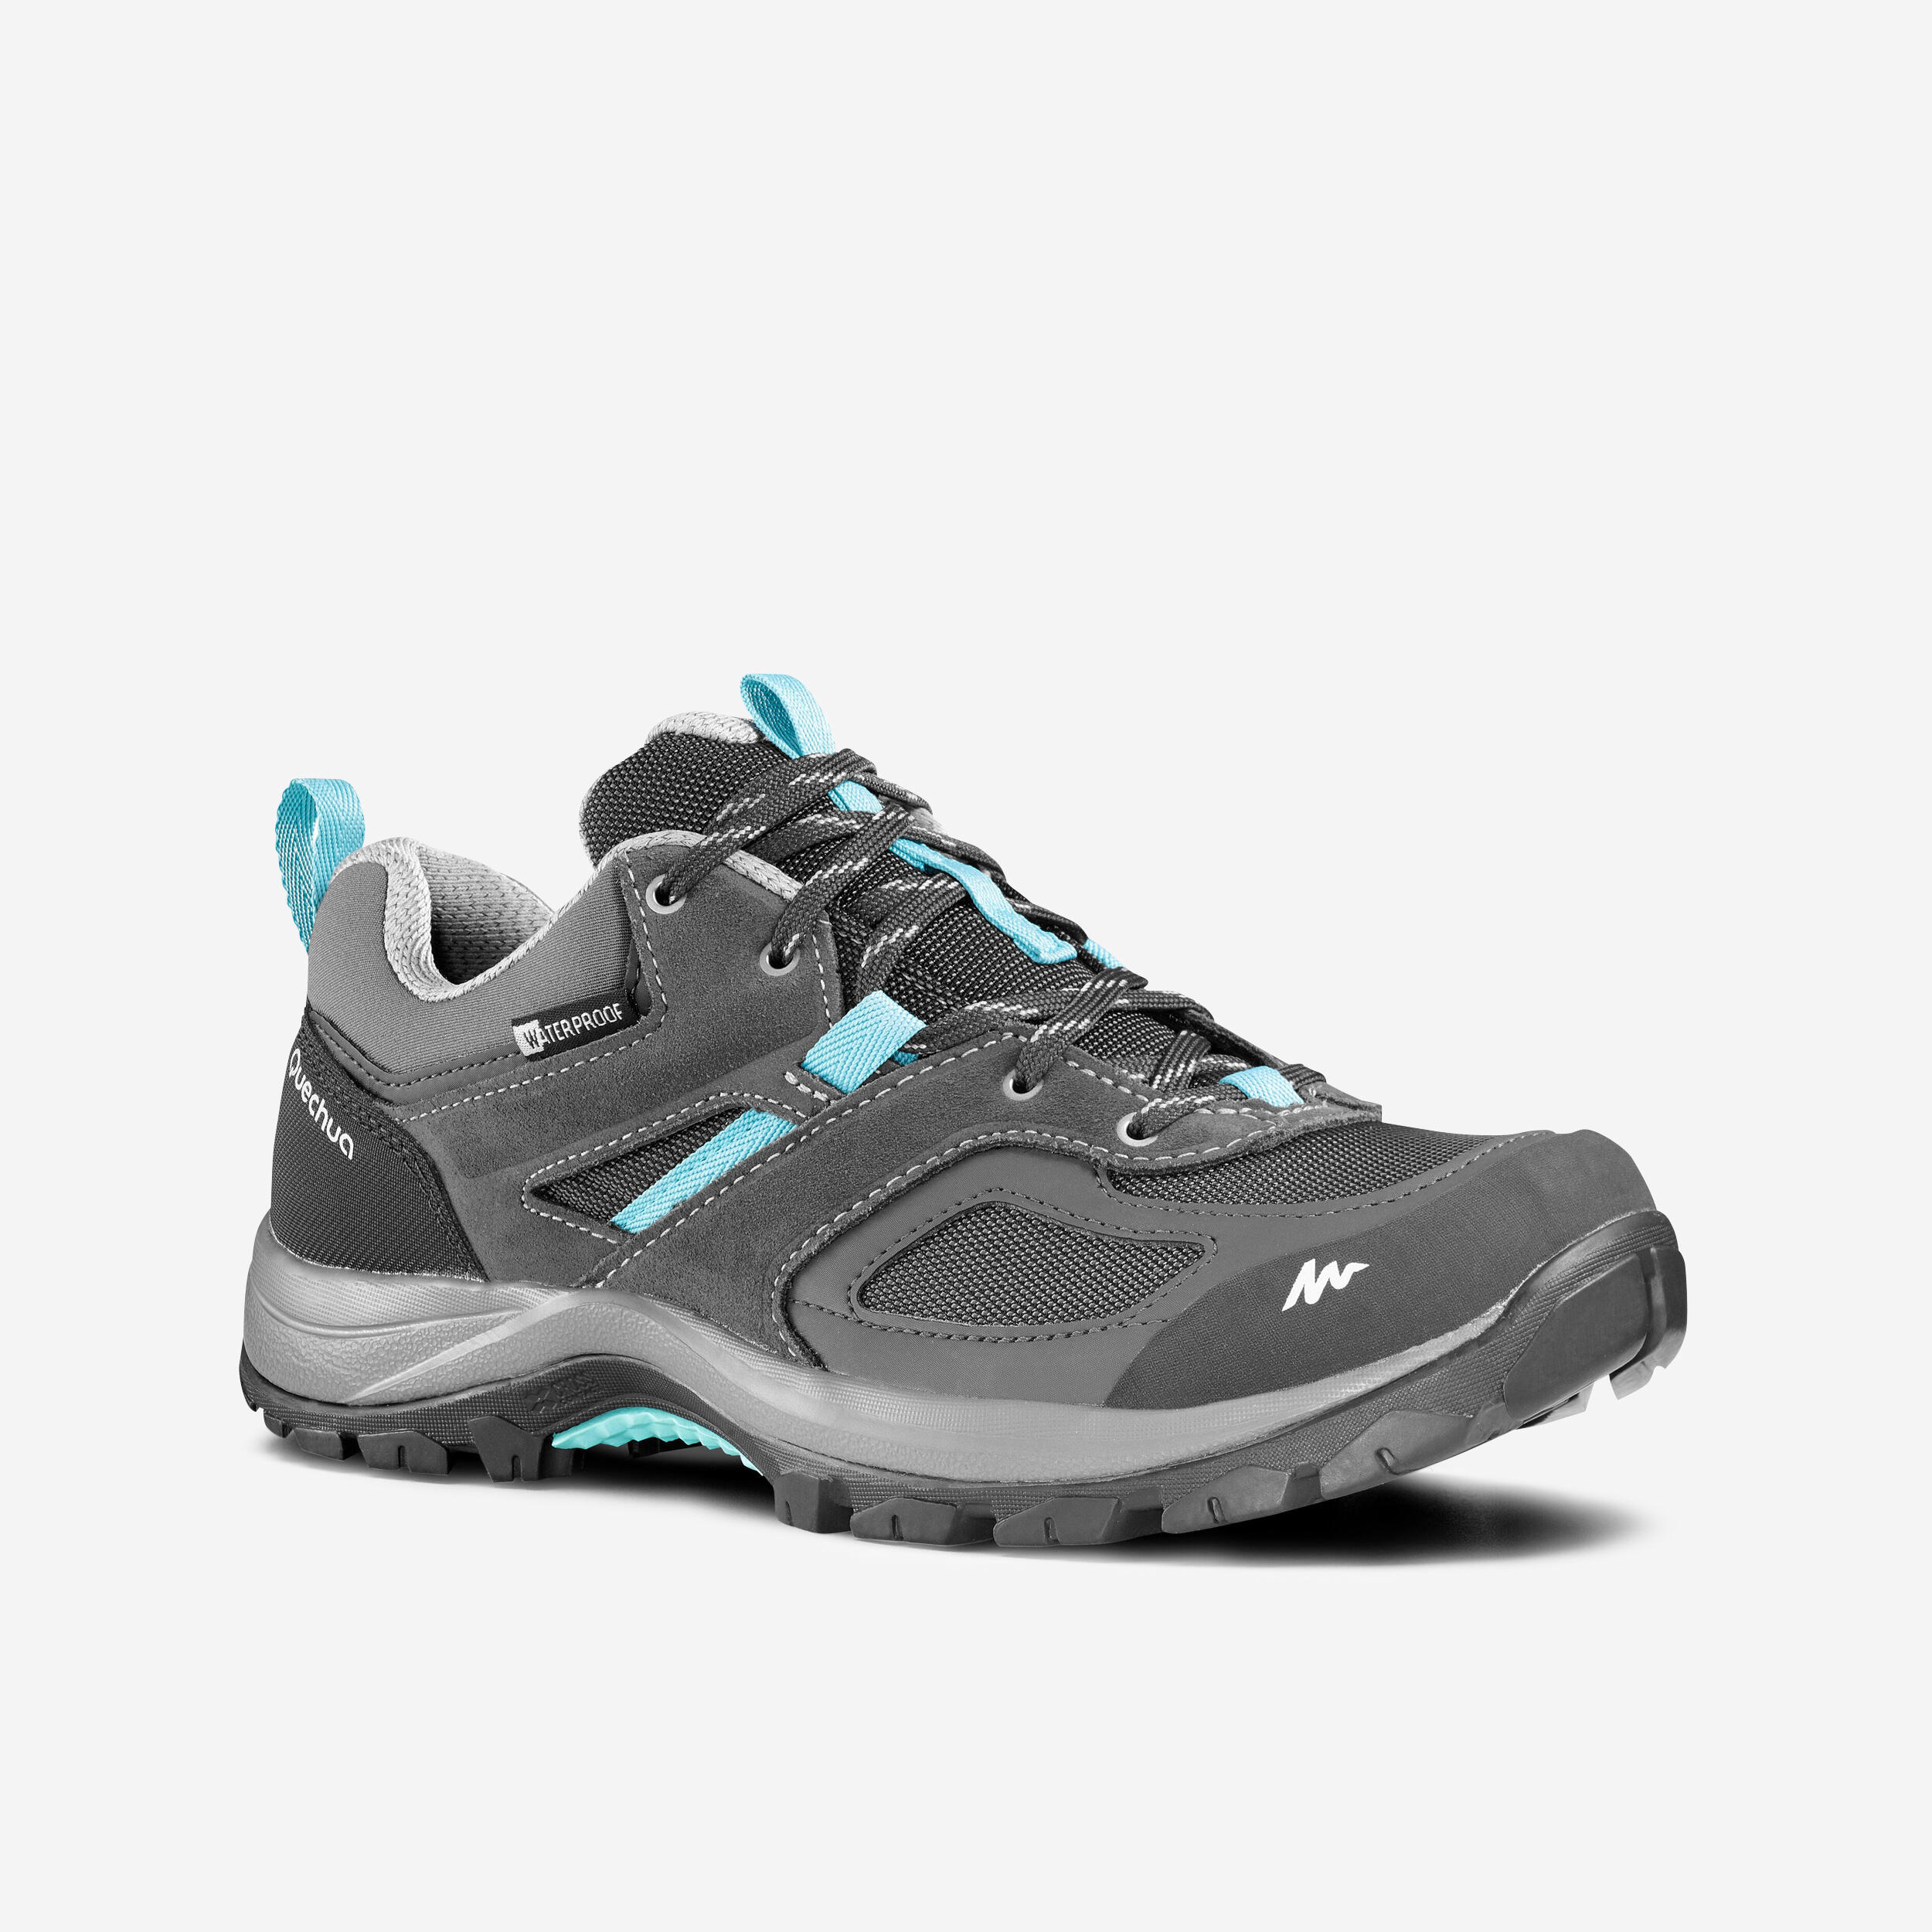 Buy Women's Hiking Shoes WATERPROOF MH100 - Grey/Blue Online